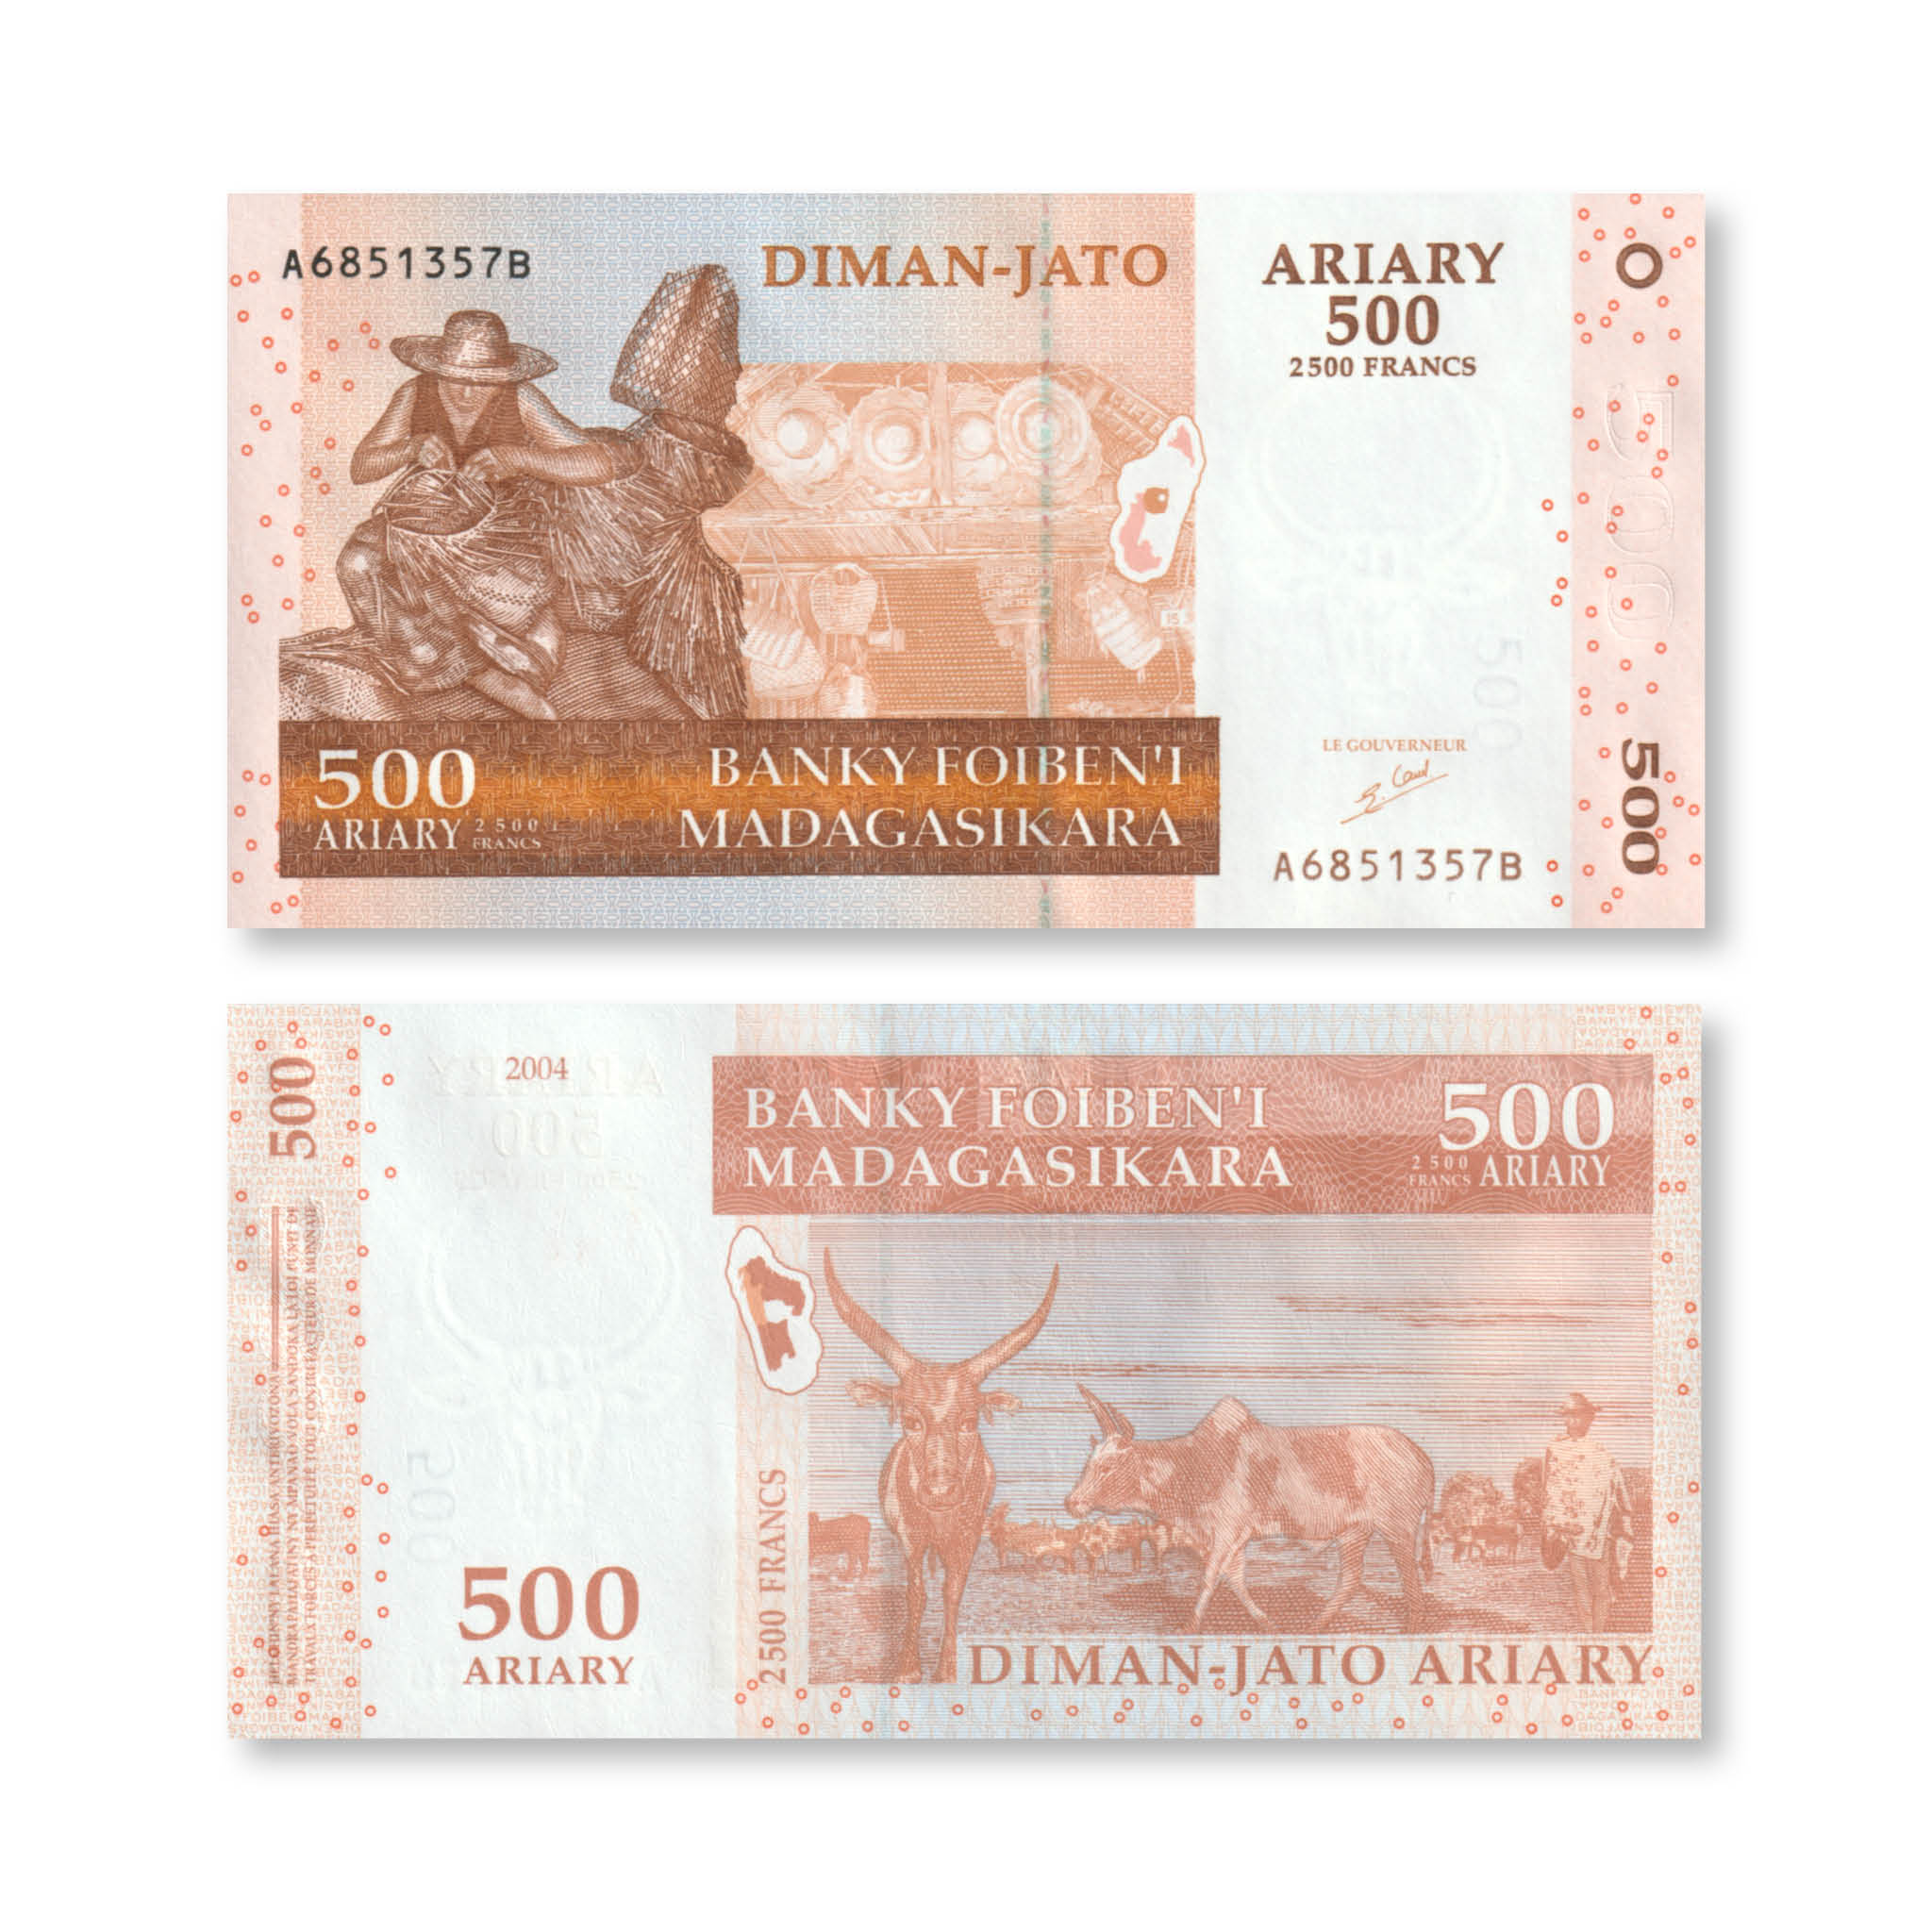 Madagascar 500 Ariary, 2004, B322a, P88a, UNC - Robert's World Money - World Banknotes